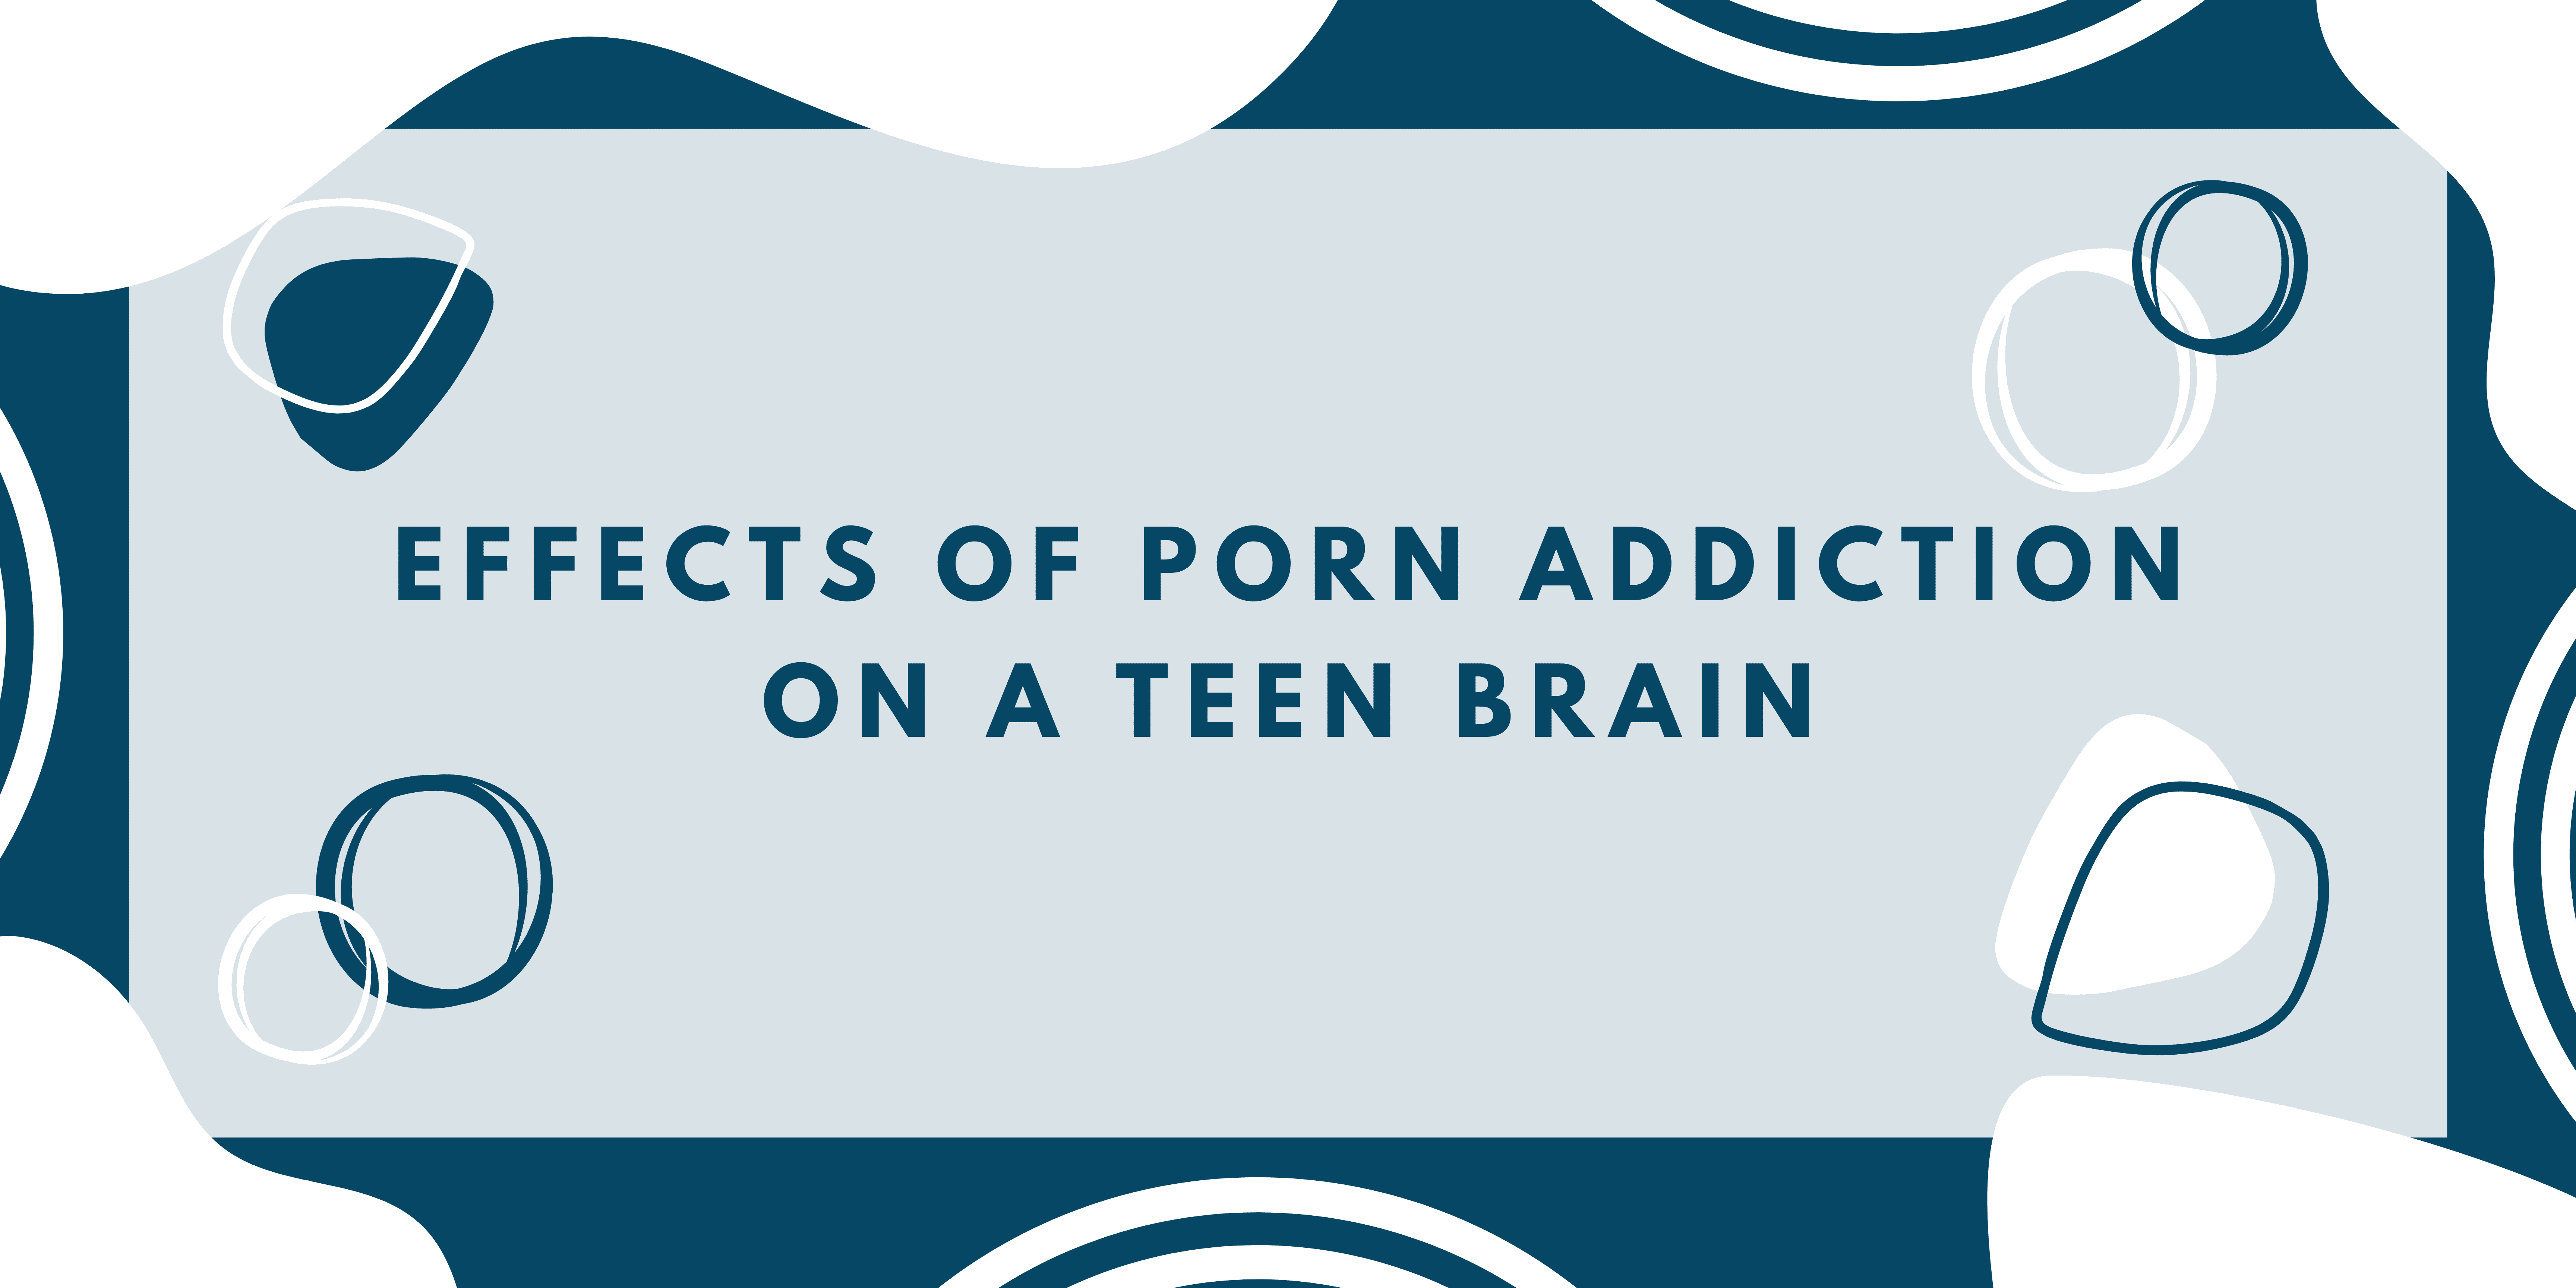 Effects of Porn Addiction on a Teen Brain